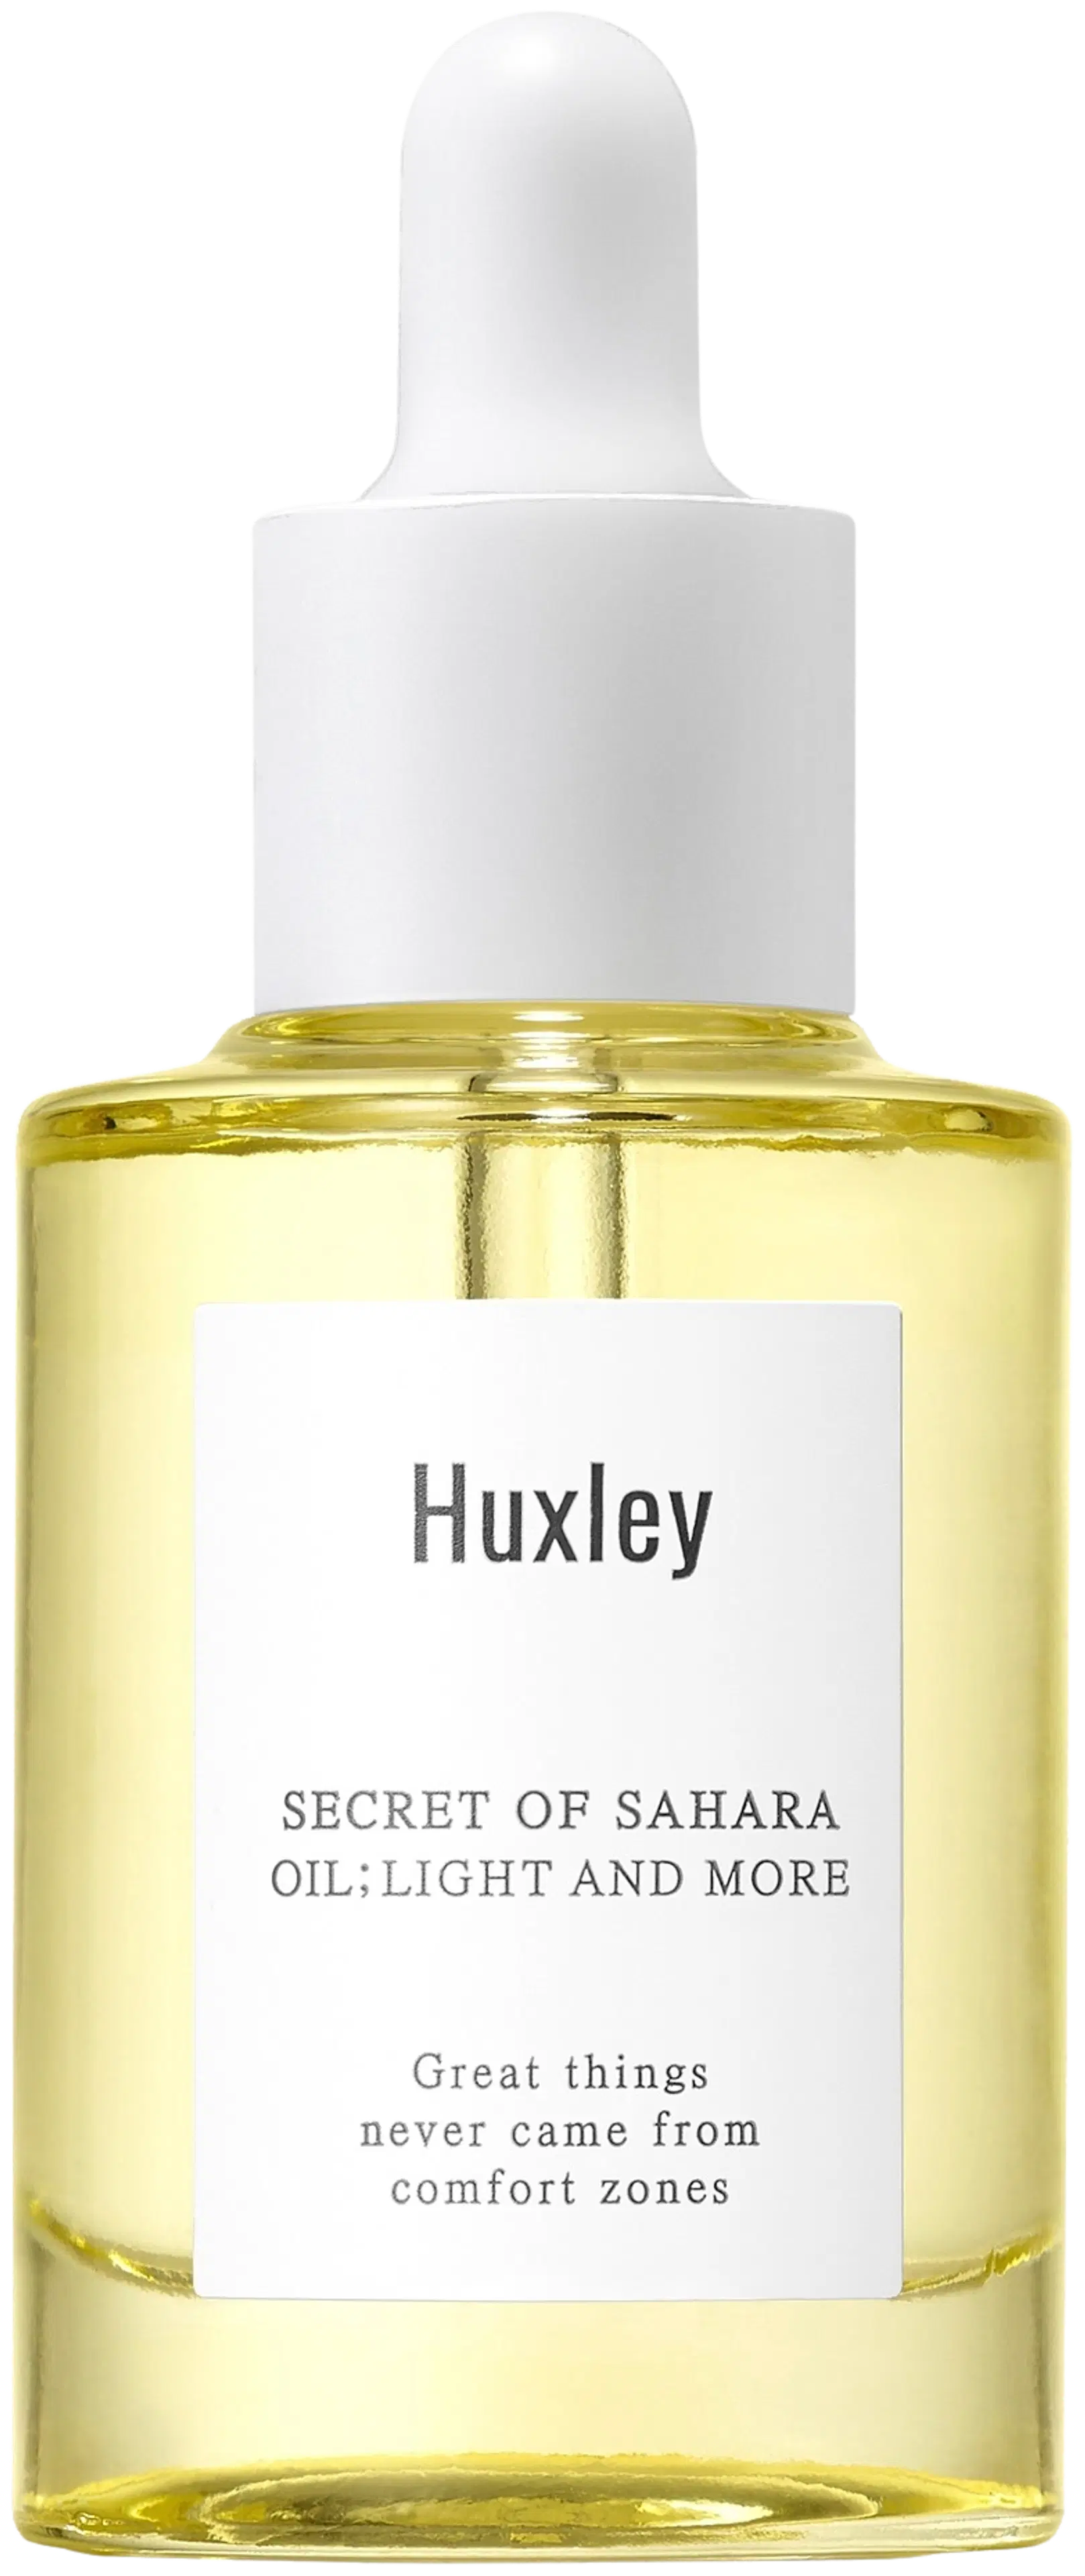 Huxley Huxley Oil; Light and More kasvoöljy 30ml